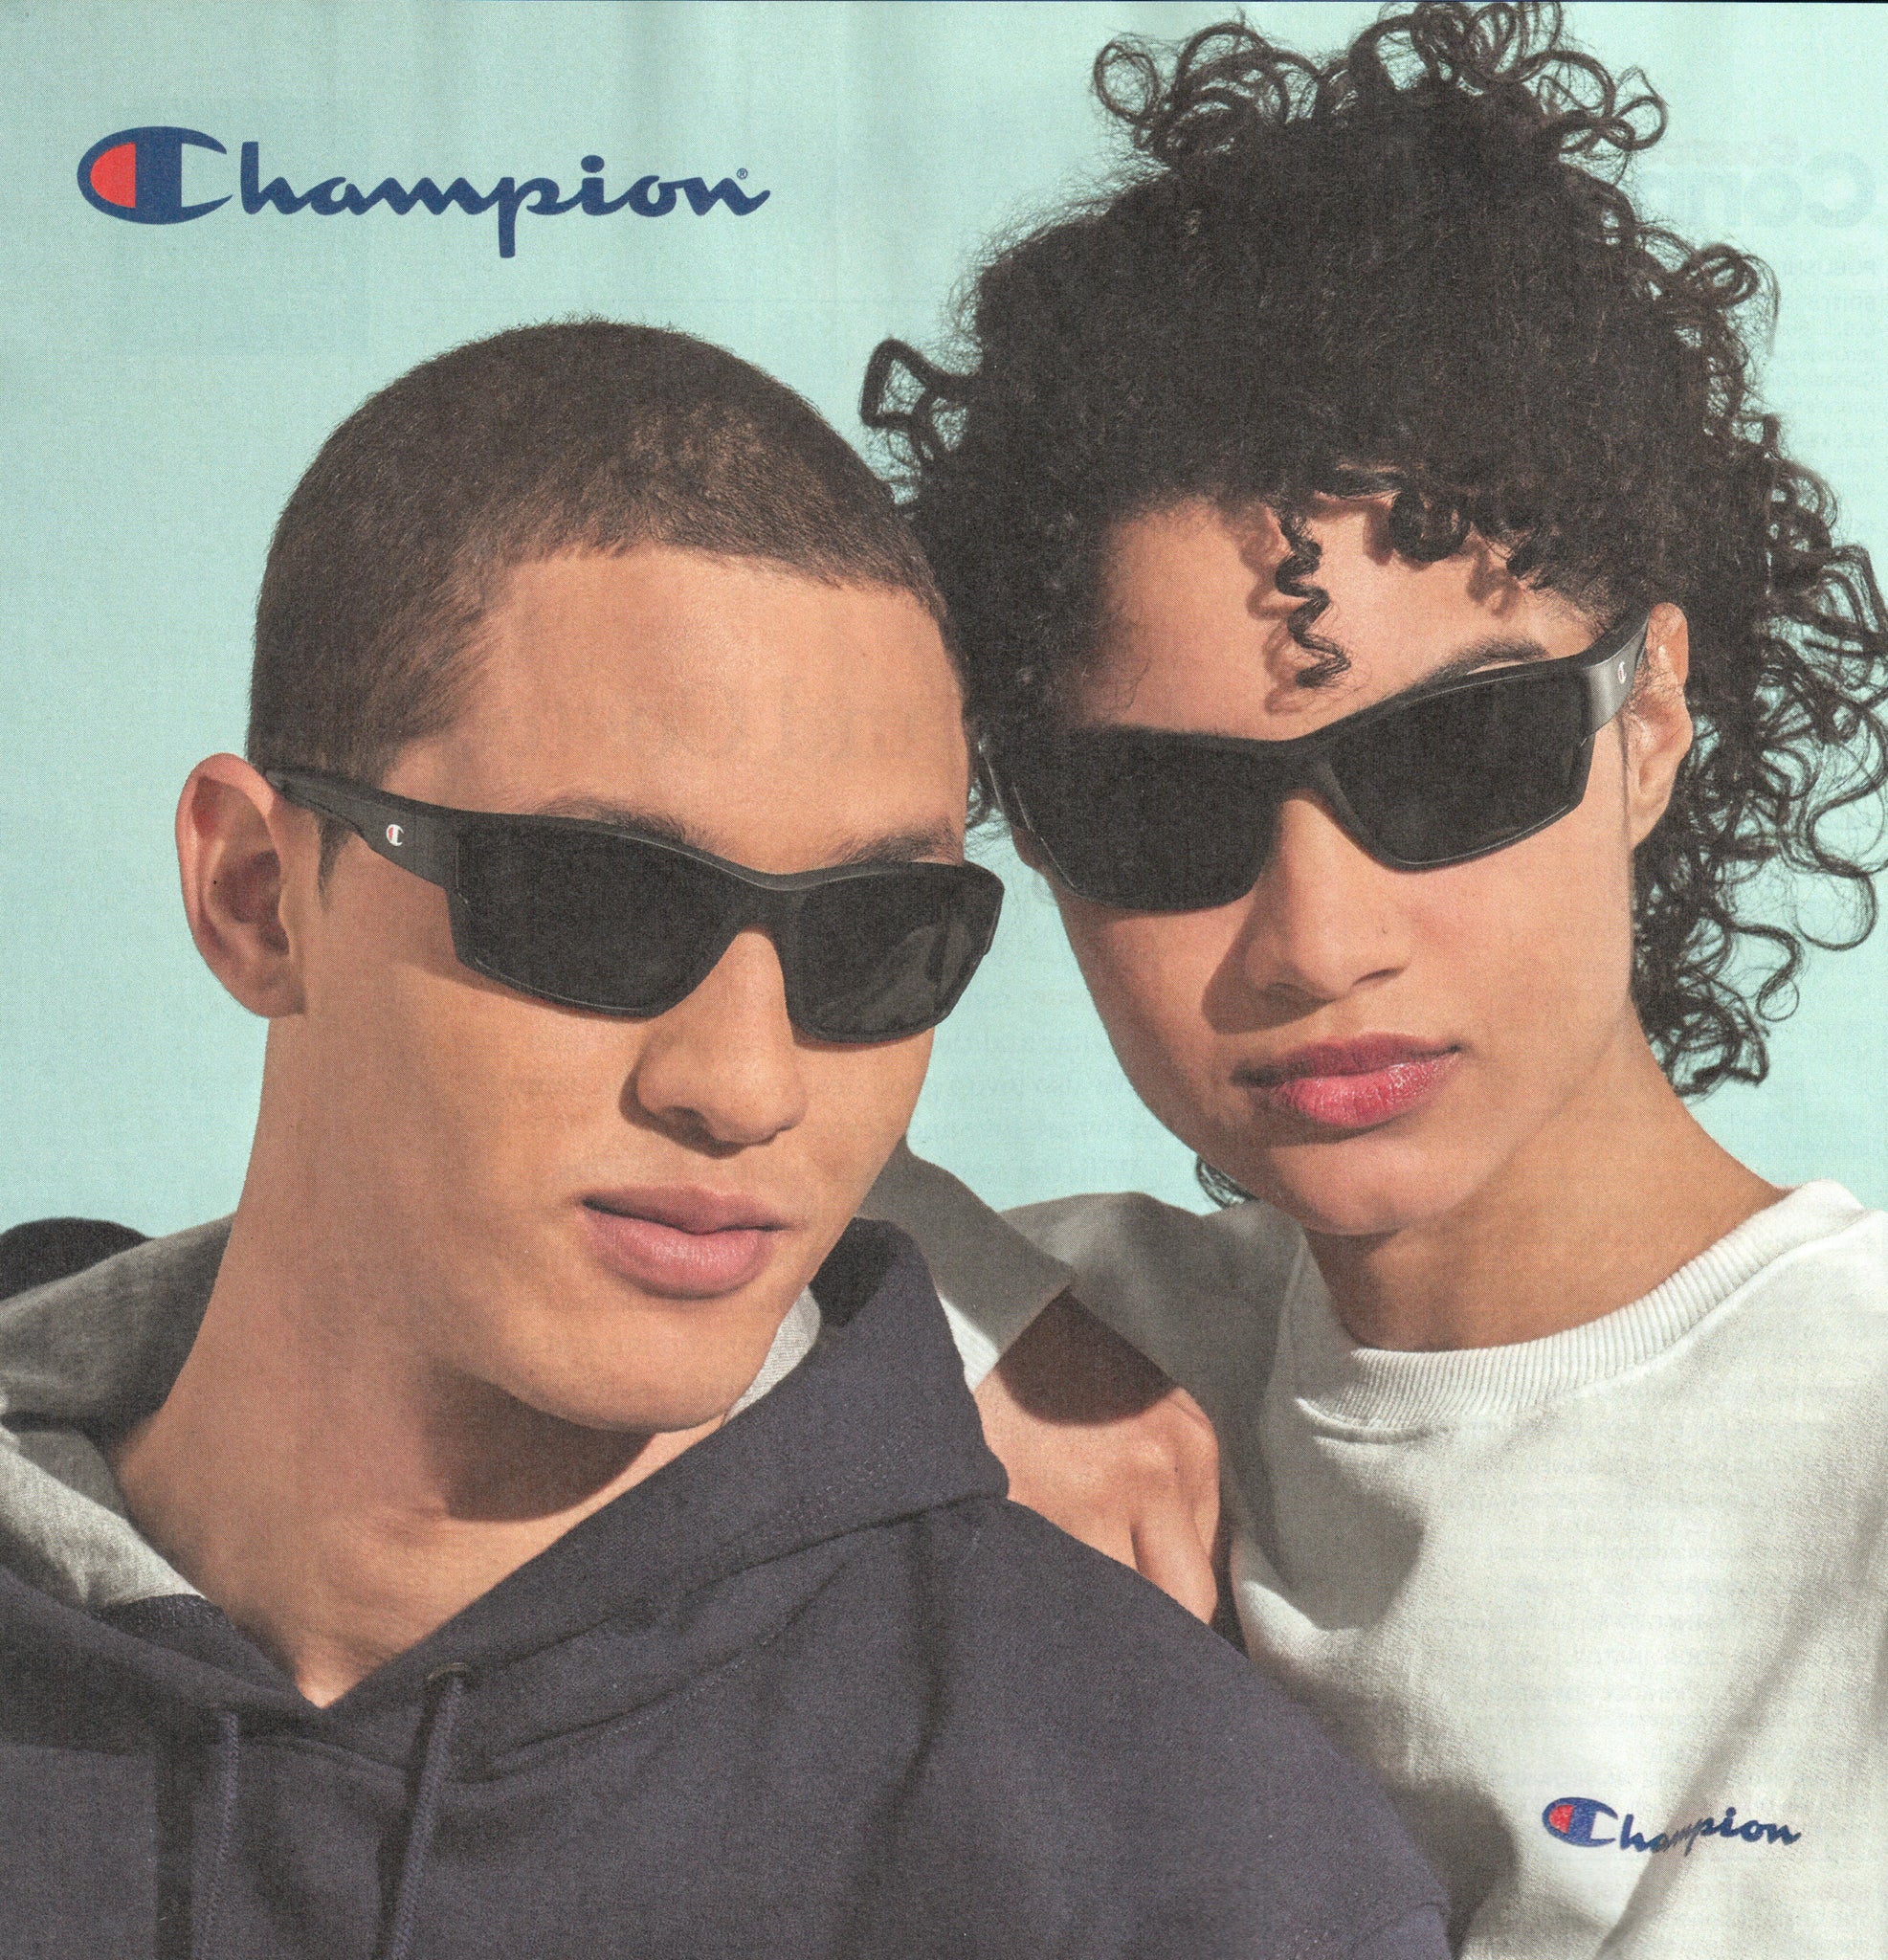 Champion Sunglasses CUTR2023CAOI Polarized Optical Quality 6 Layer Len –  HomeGymBodybuilding, E-biz Enterprises LLC